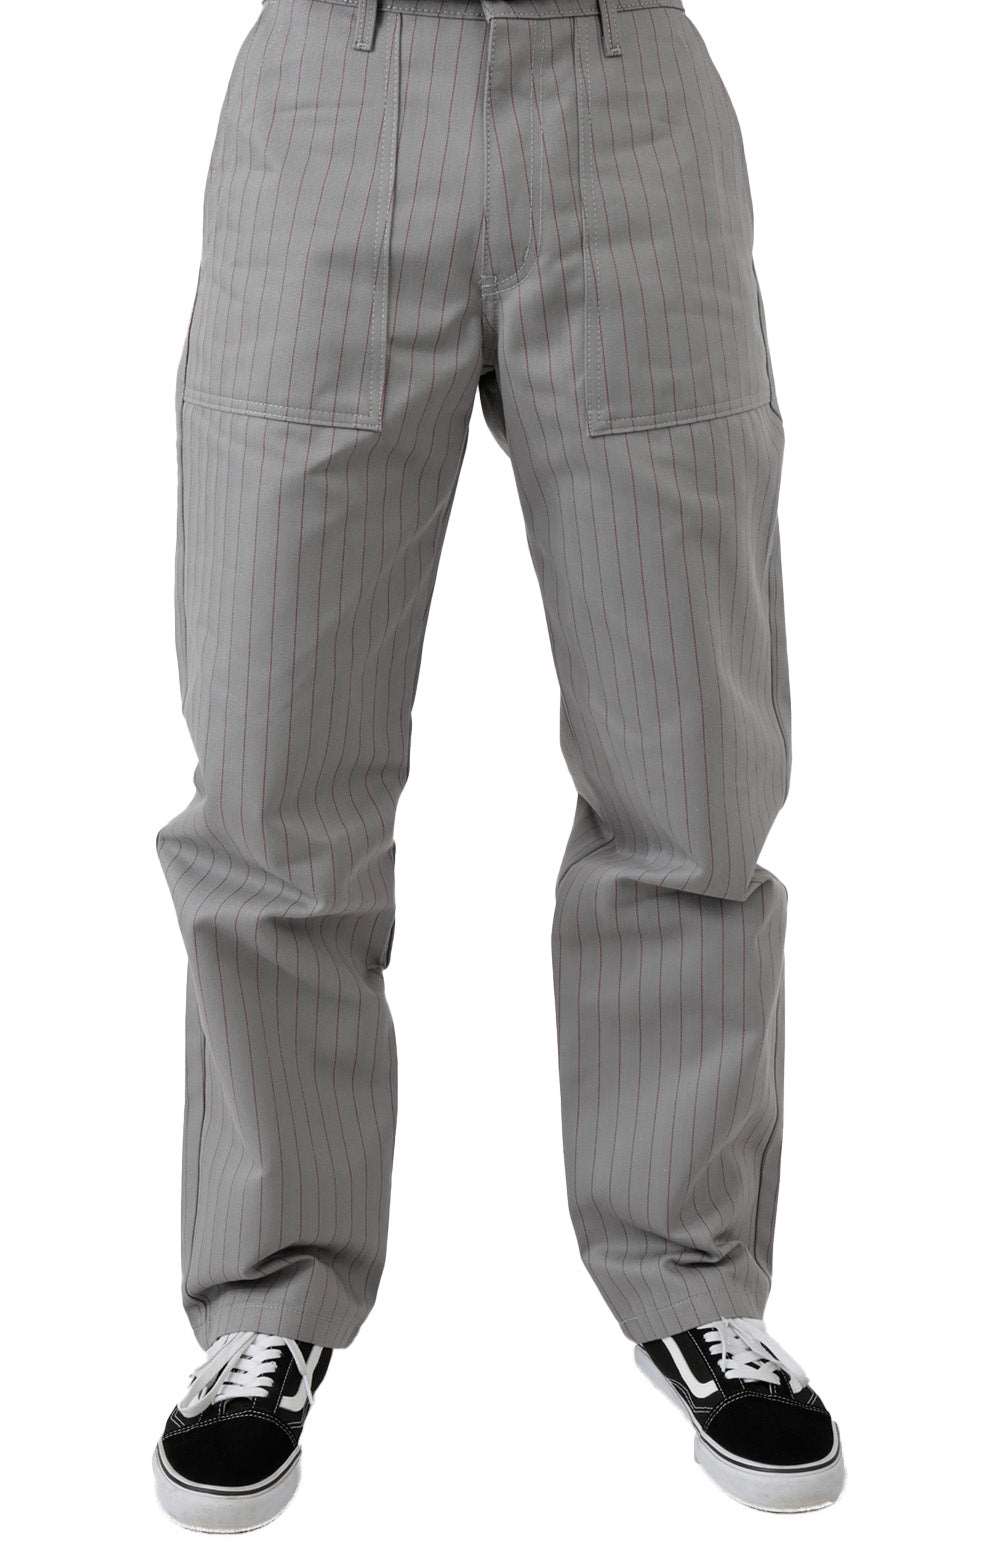 (101905198) Repro Workwear Twill Pants - Grey